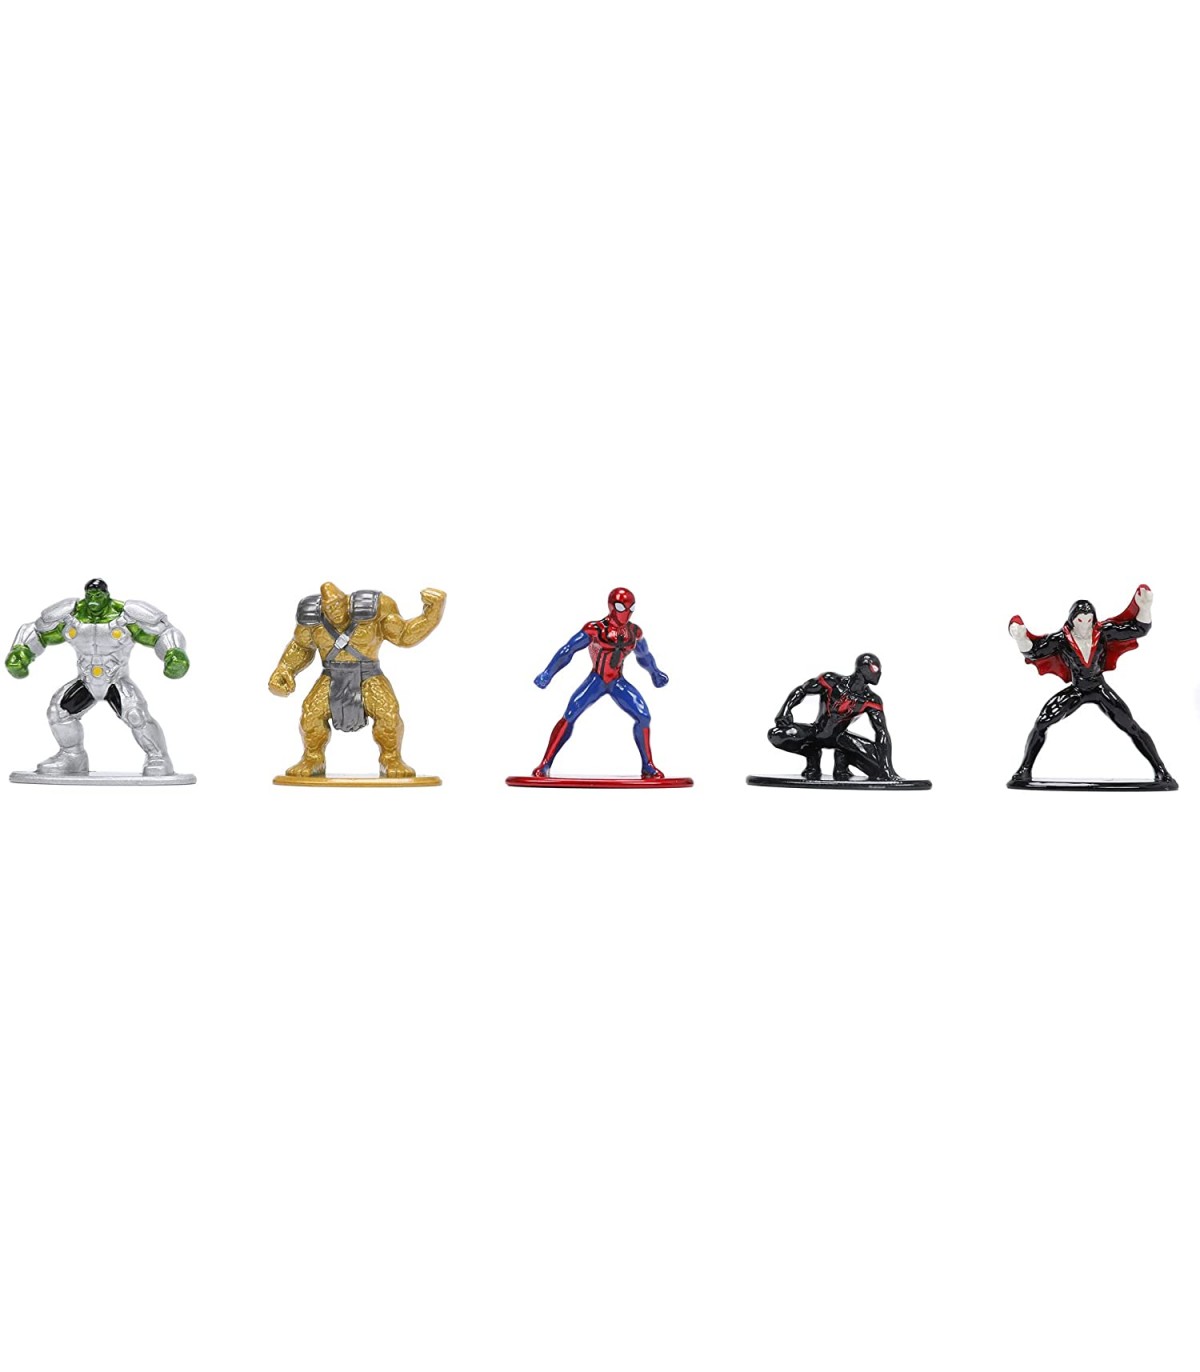 Set 20 figuras Marvel 4cm